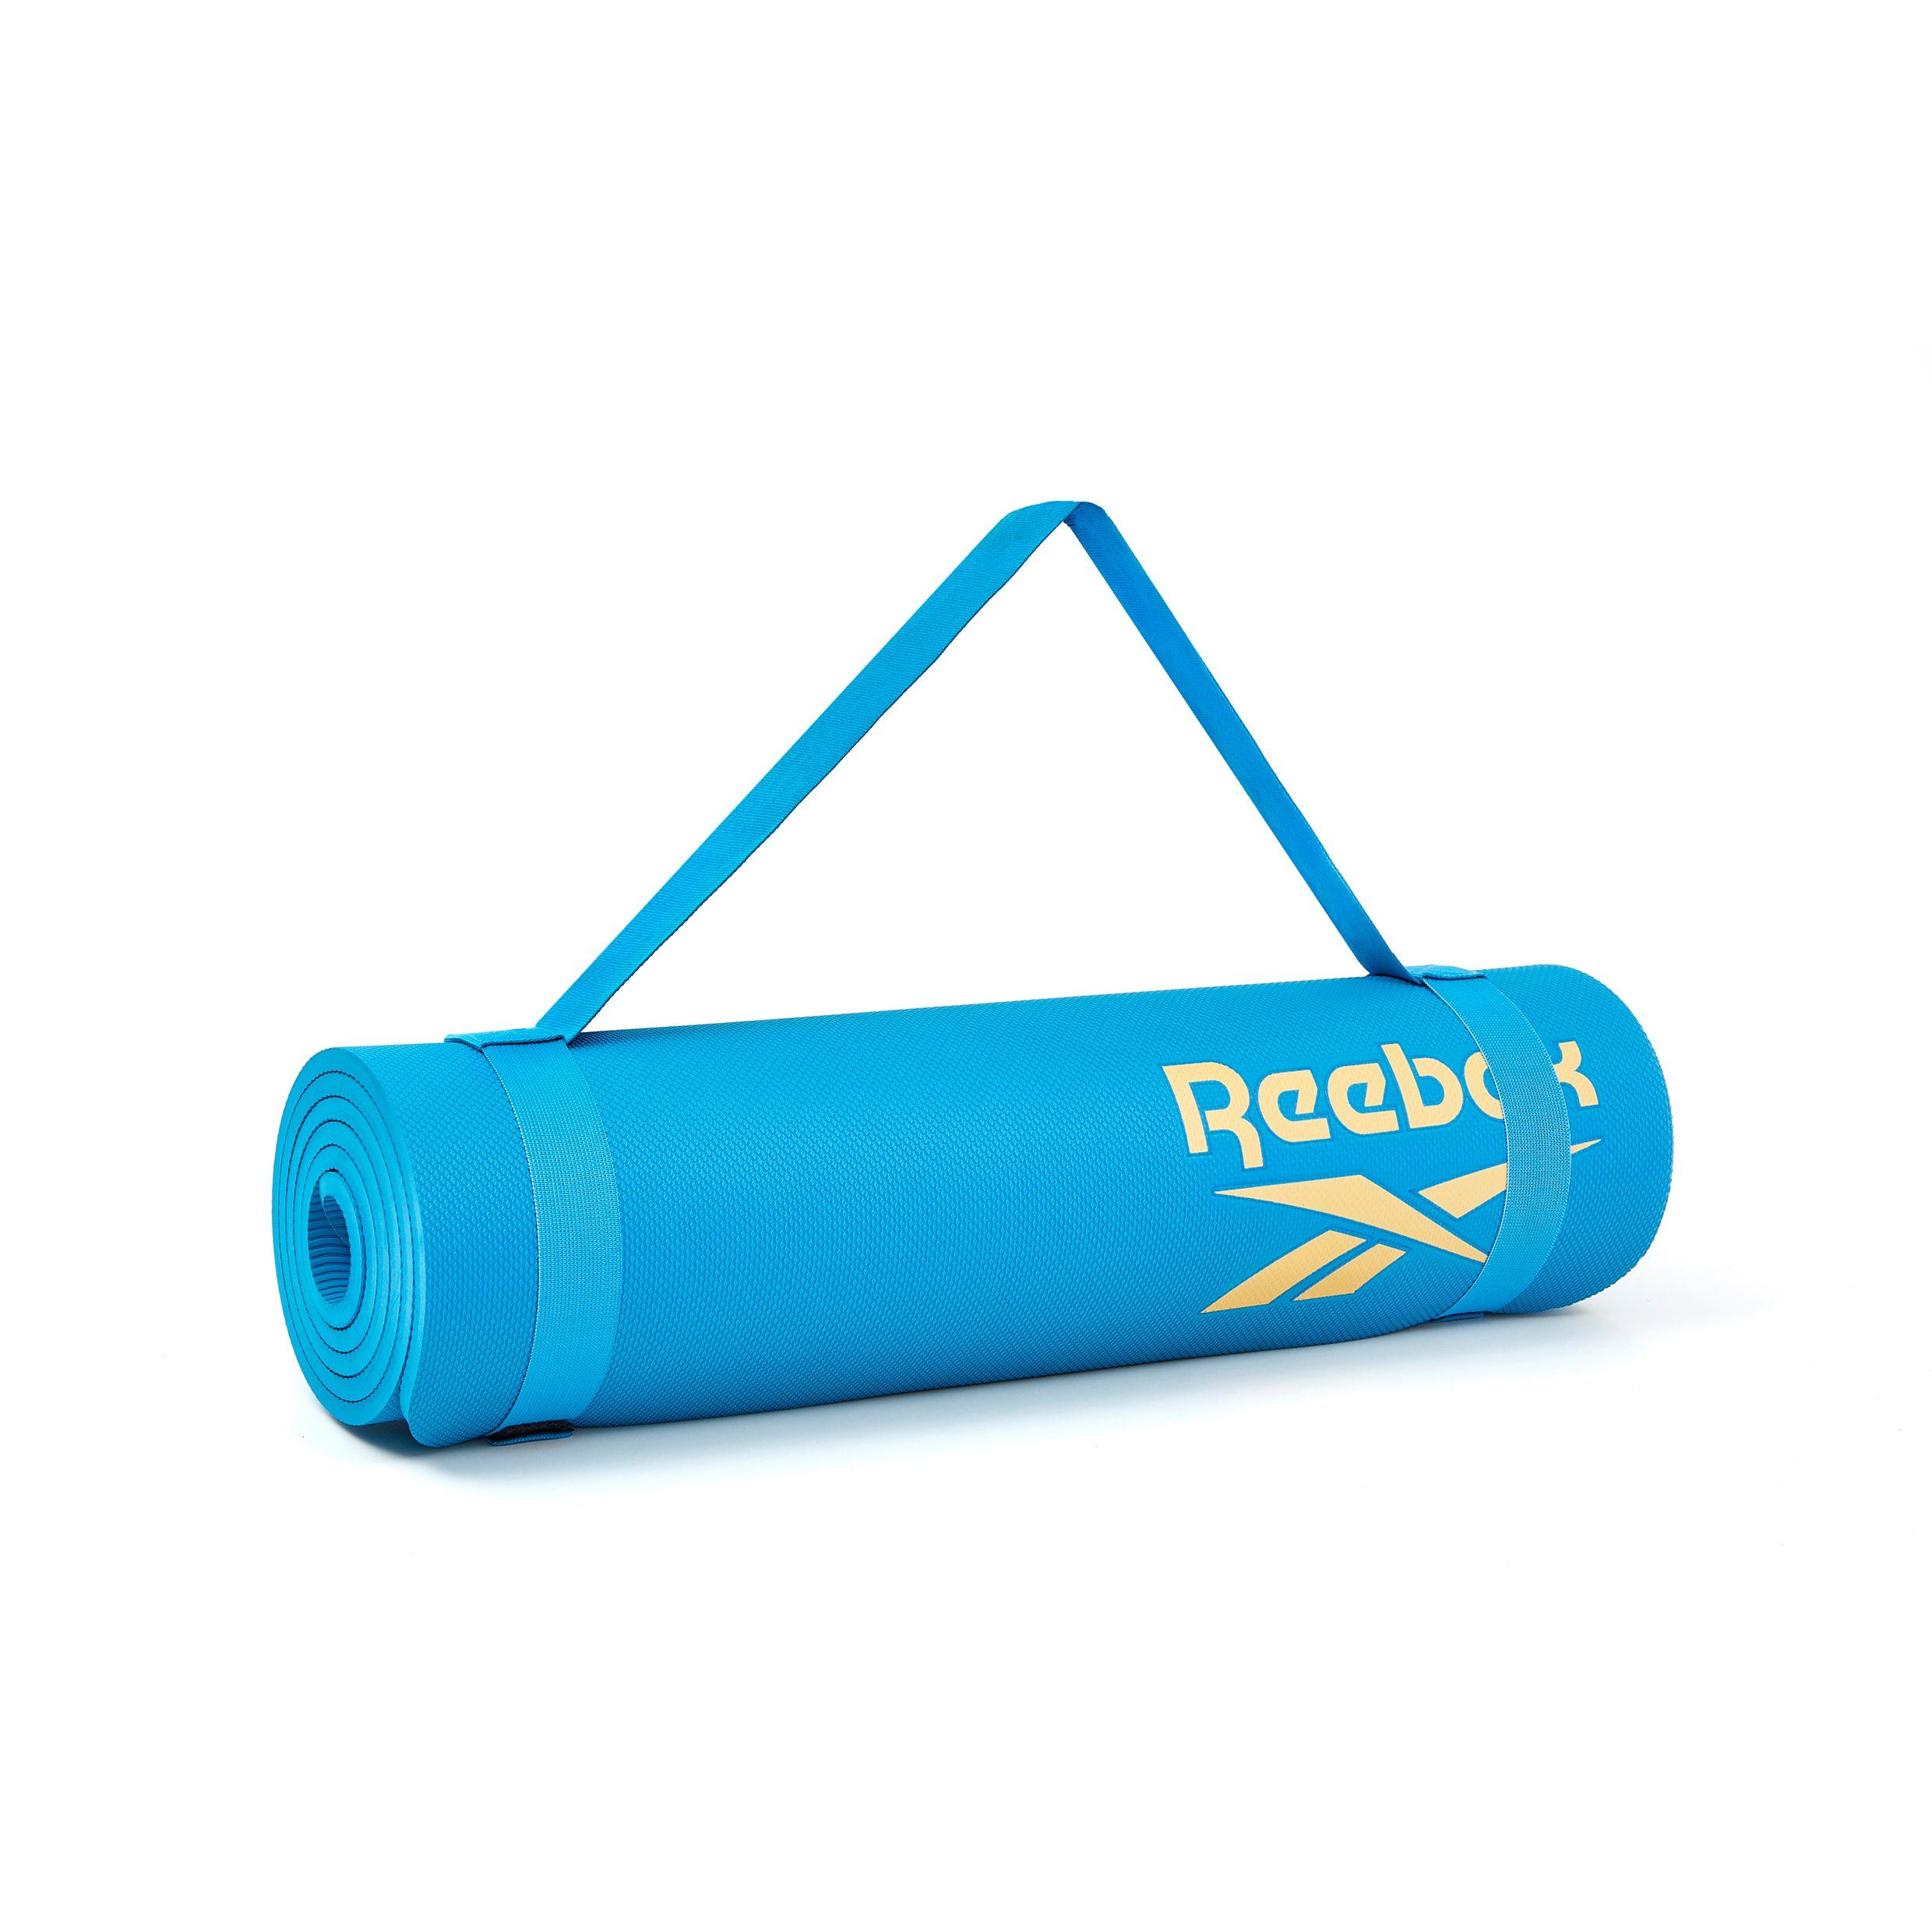 Reebok Performance, rutschfestem und Blau, Fitness-/Trainingsmatte mit Reebok 8mm, strapazierfähigem Fitnessmatte Material